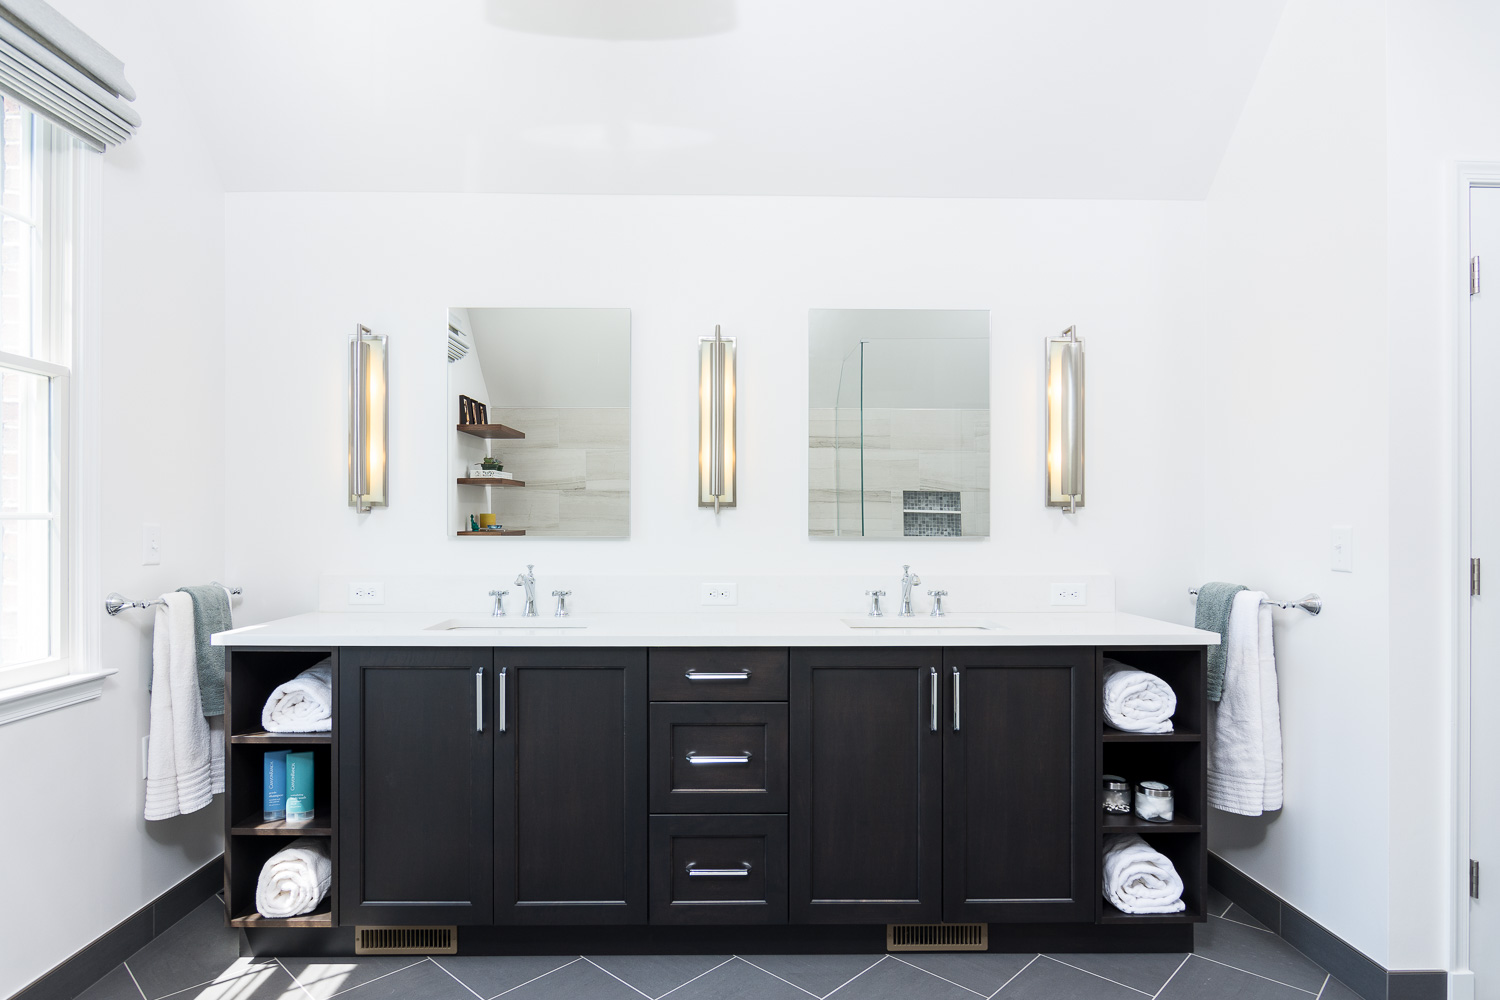 How To Select Bathroom Vanity Lighting, Make Your Own Bathroom Vanity Light